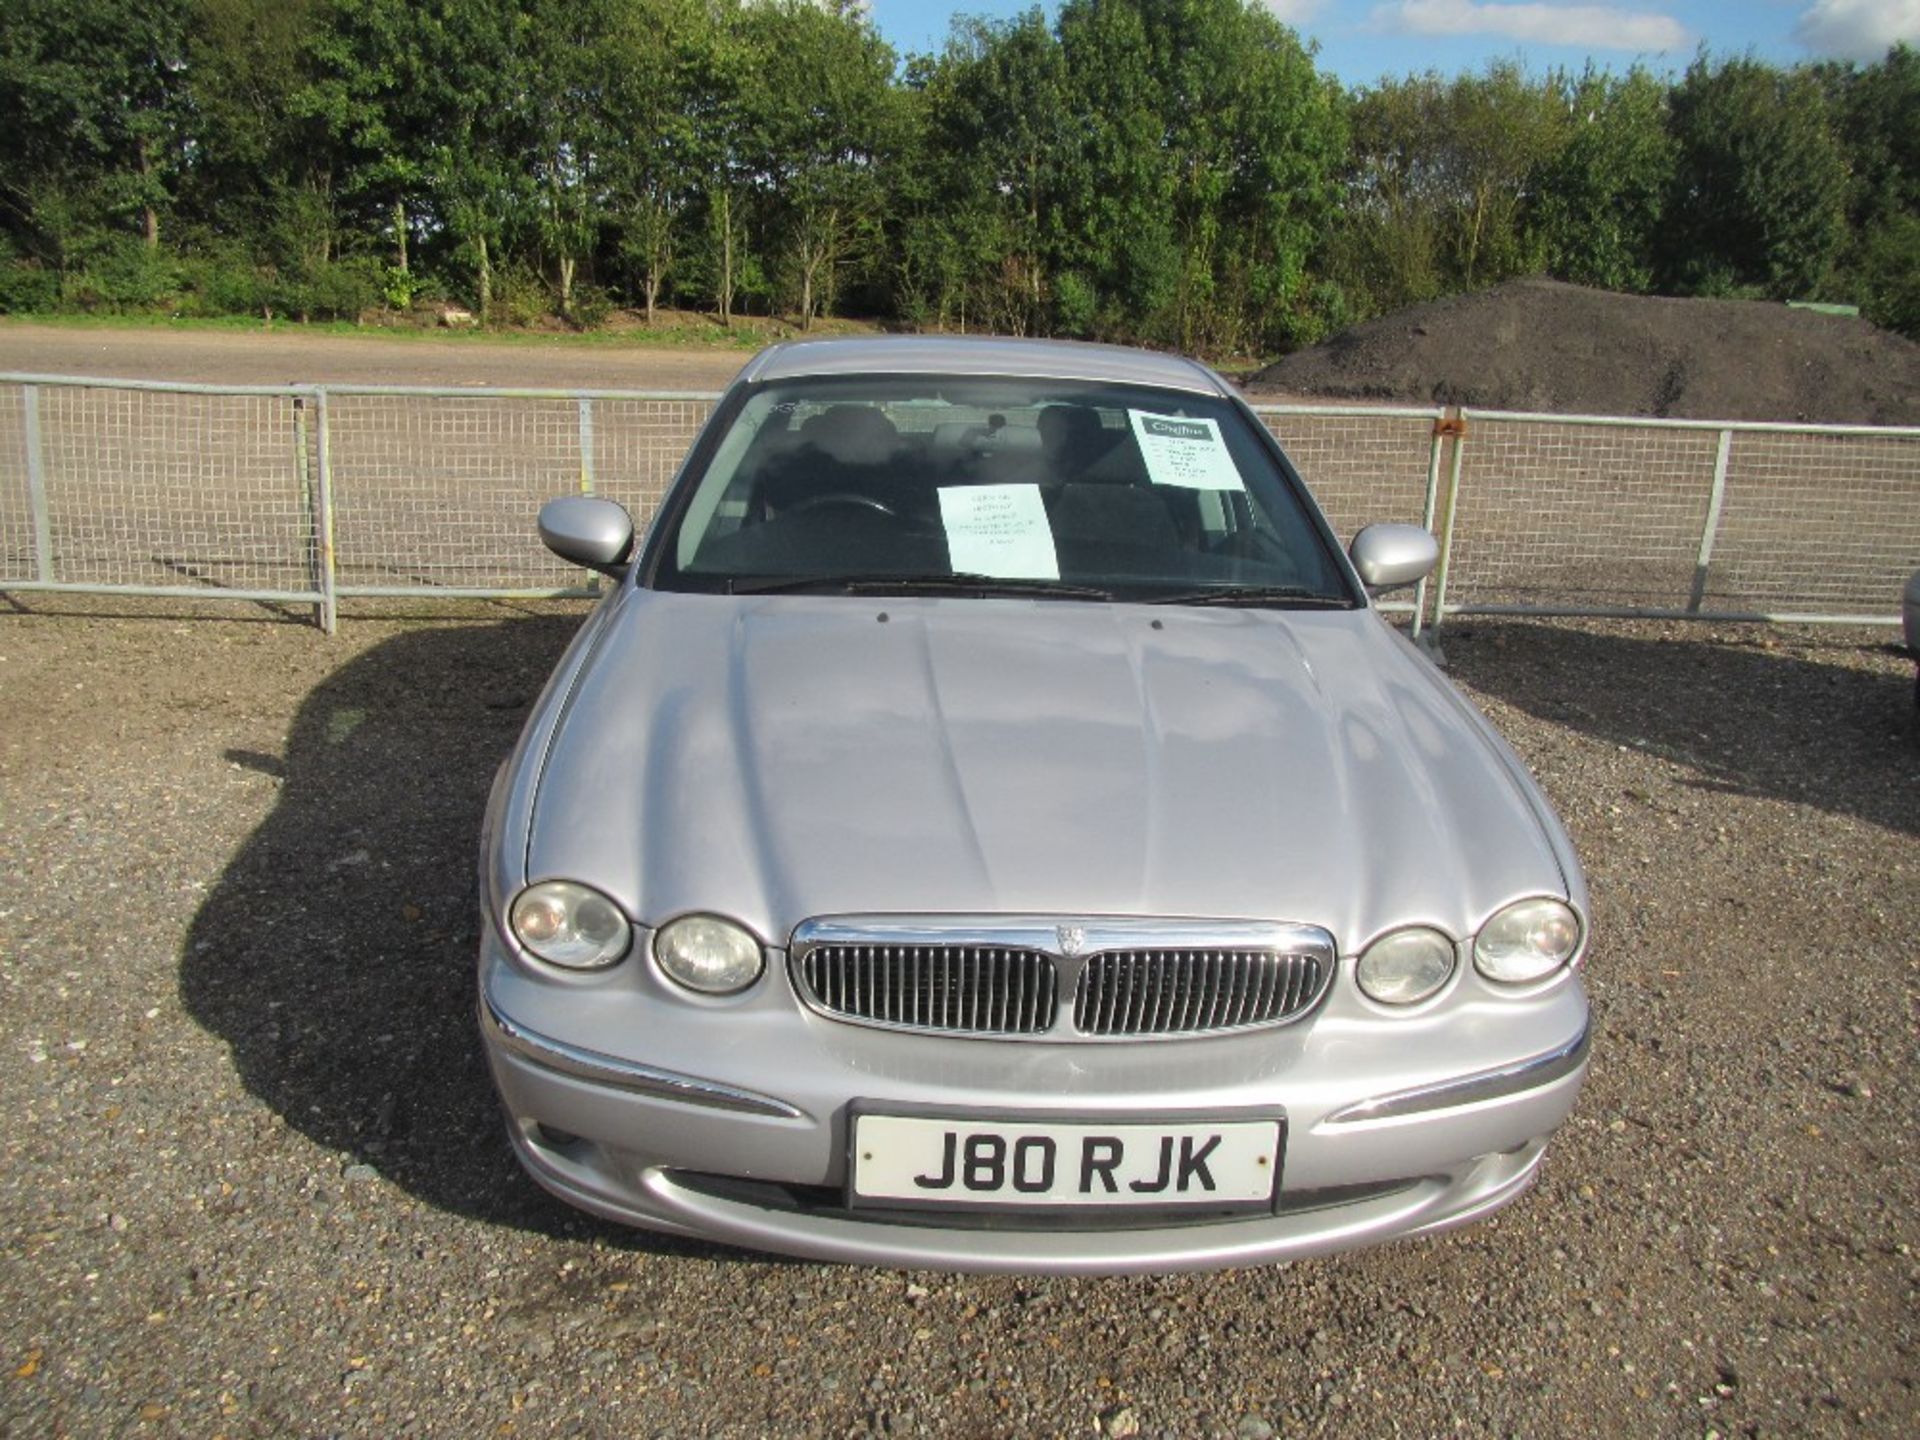 2003 Jaguar X Type 2.1 Petrol. Reg. Docs. will be supplied. Mileage: 122,041. MOT till 9/6/17 Reg. - Image 2 of 5